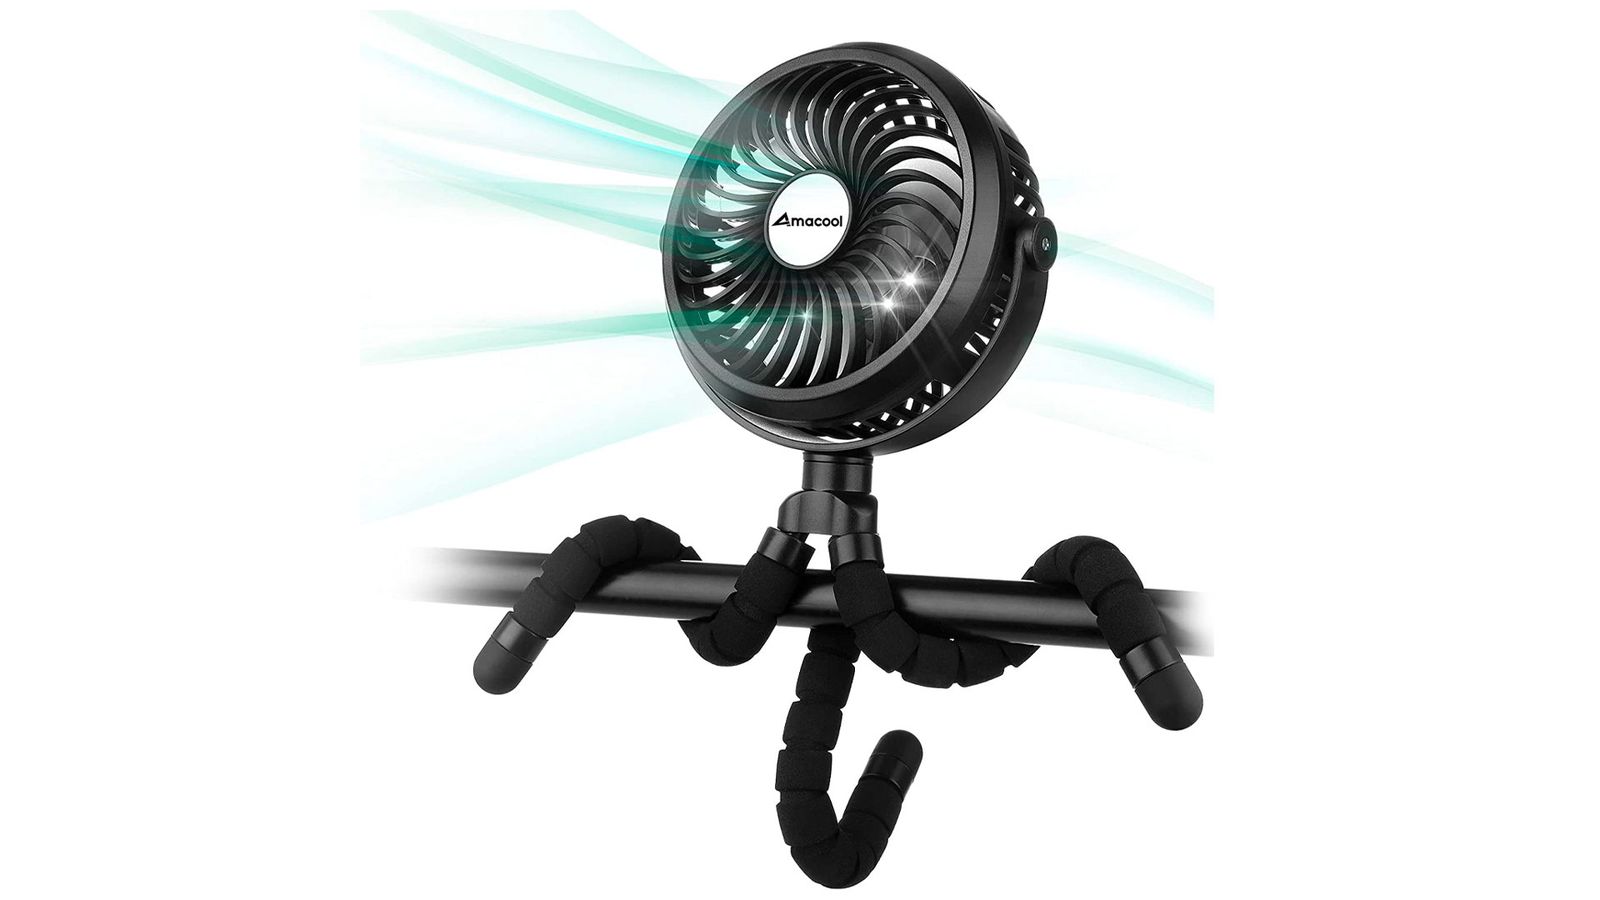 AMACOOL Battery Operated Tripod Fan product image of a black tripod fan.